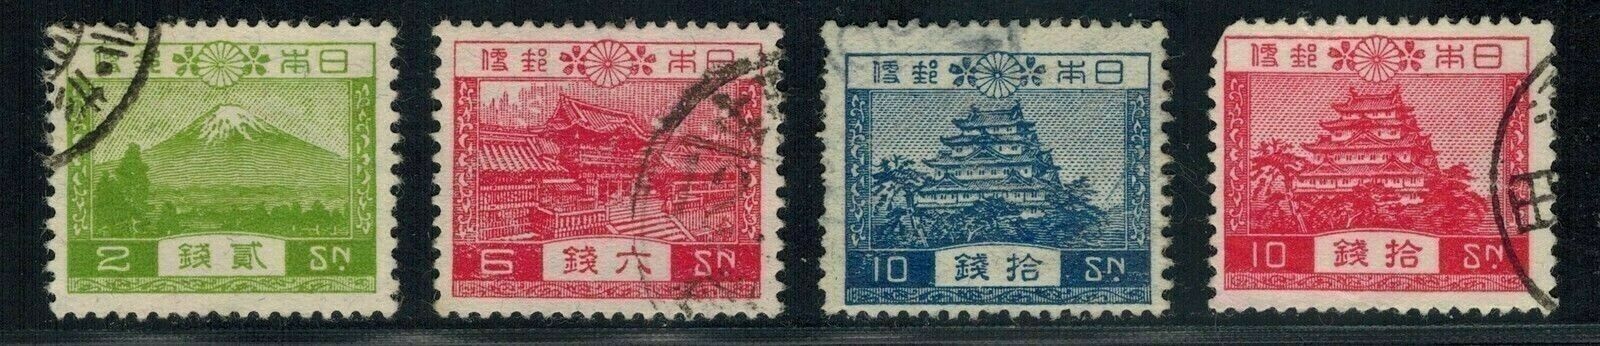 Japan Sc# 194-197 used complete Fiji, Yomei, Nagoya Wmk 141 (1926-1937) Postage - $4.00